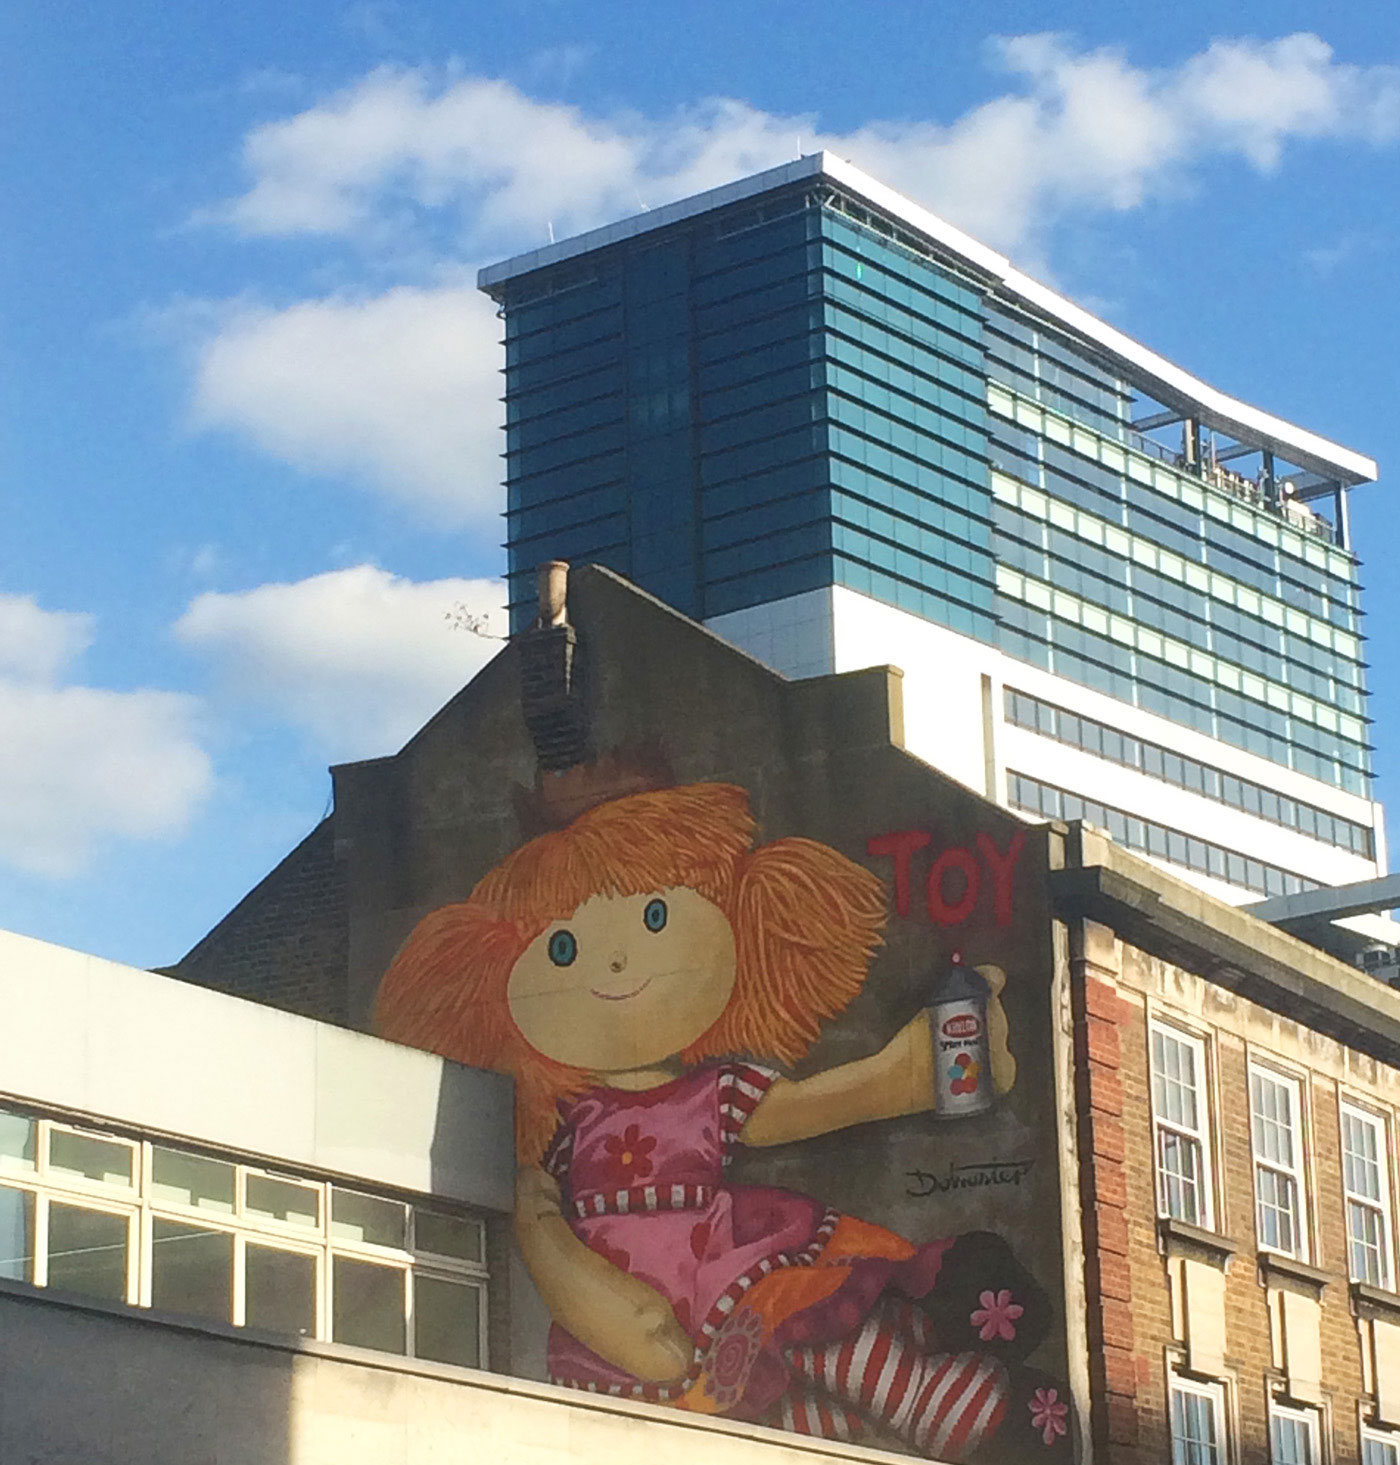 Croydon street art